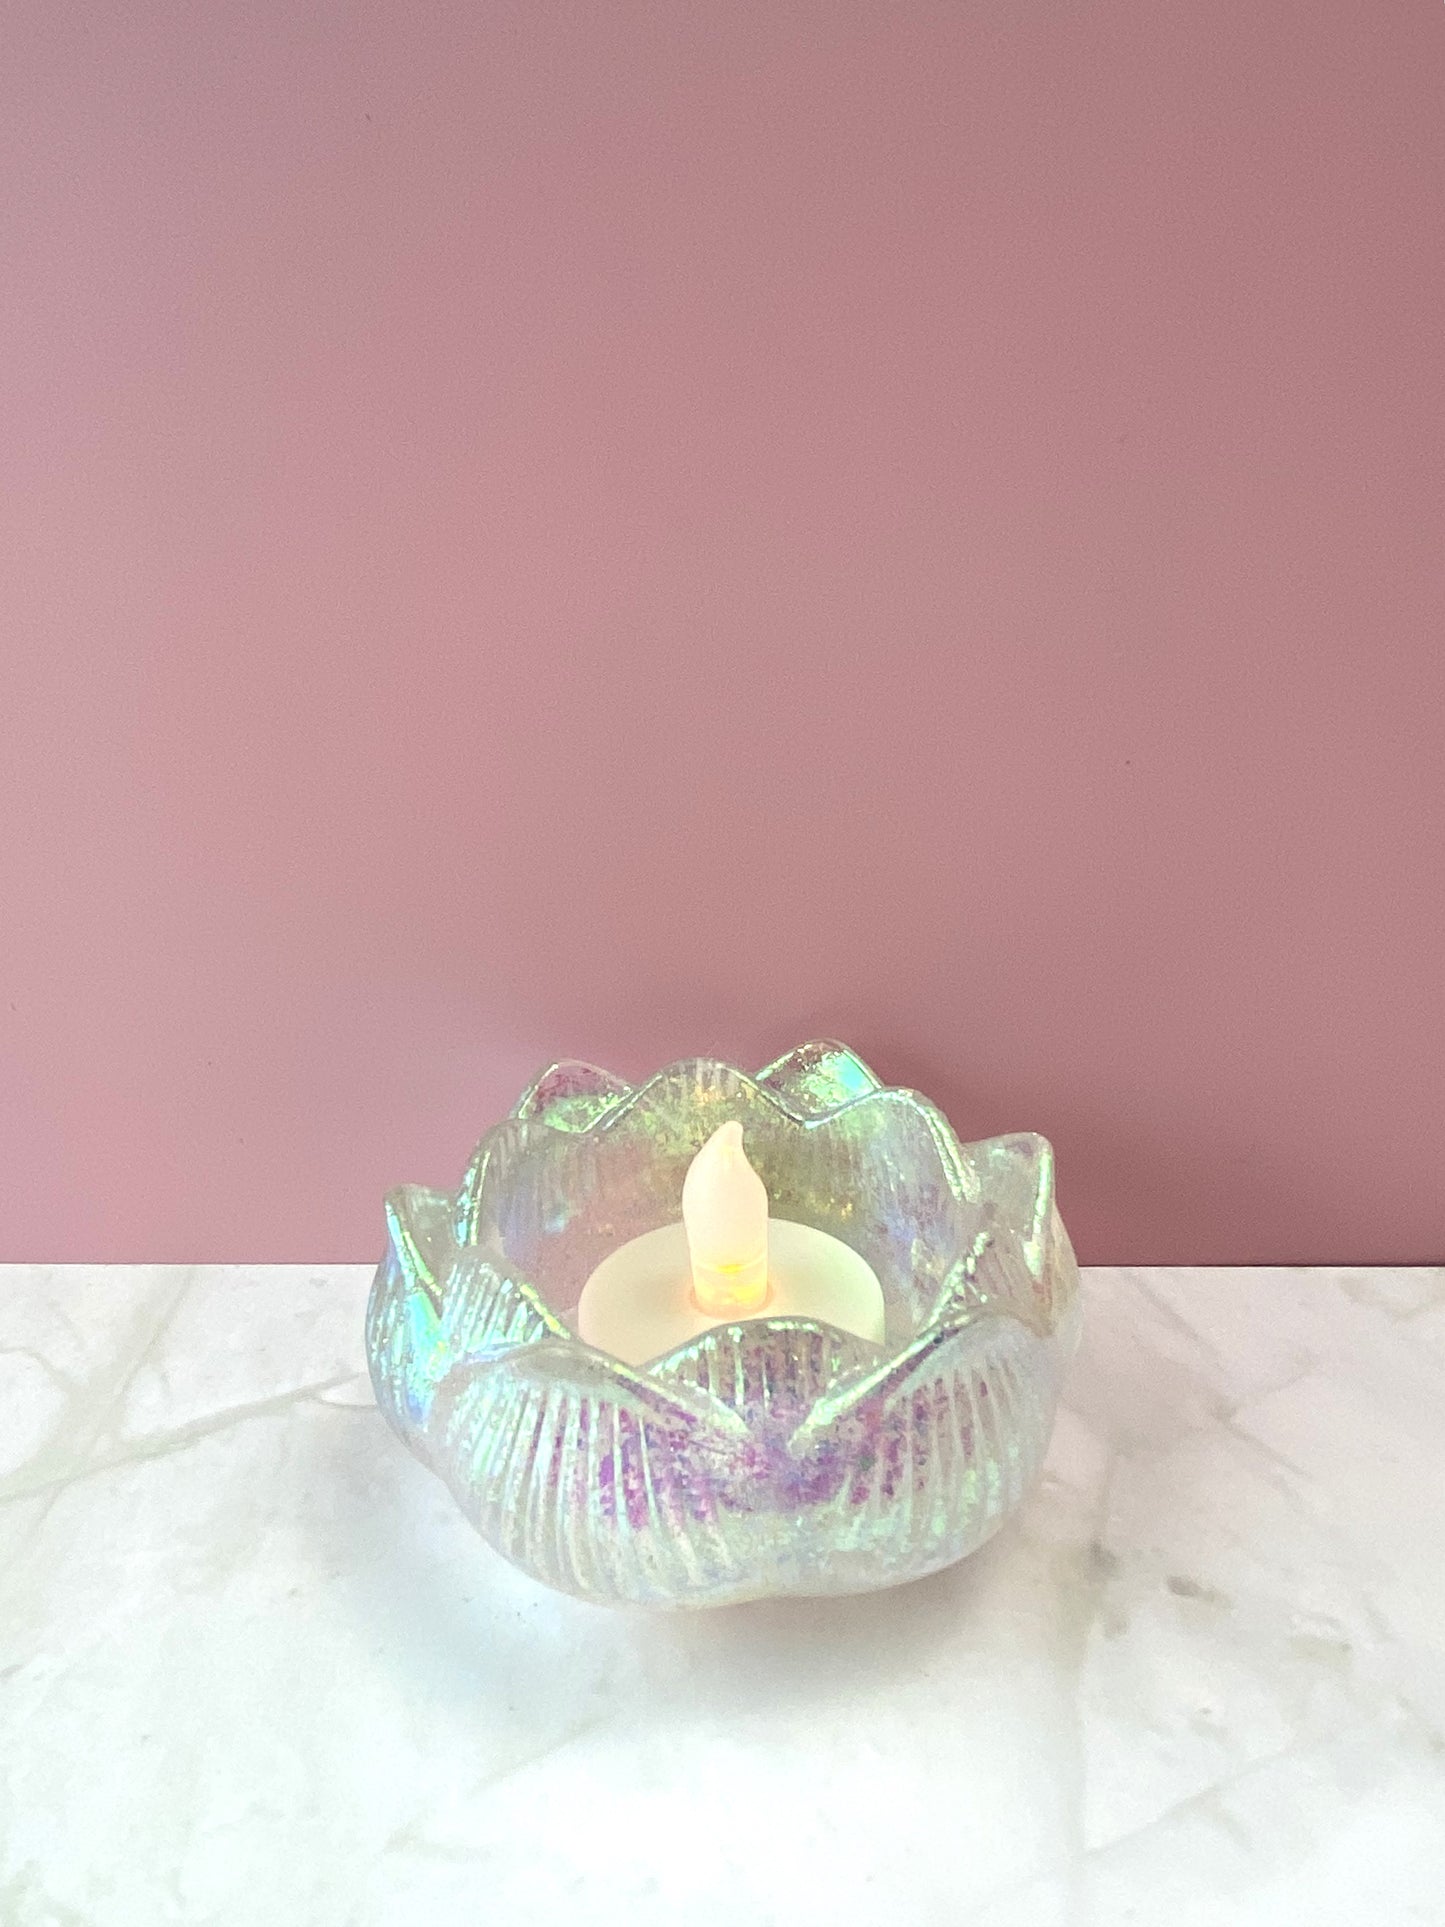 Iridescent Lotus Candle Holder | Handmade Home Decor